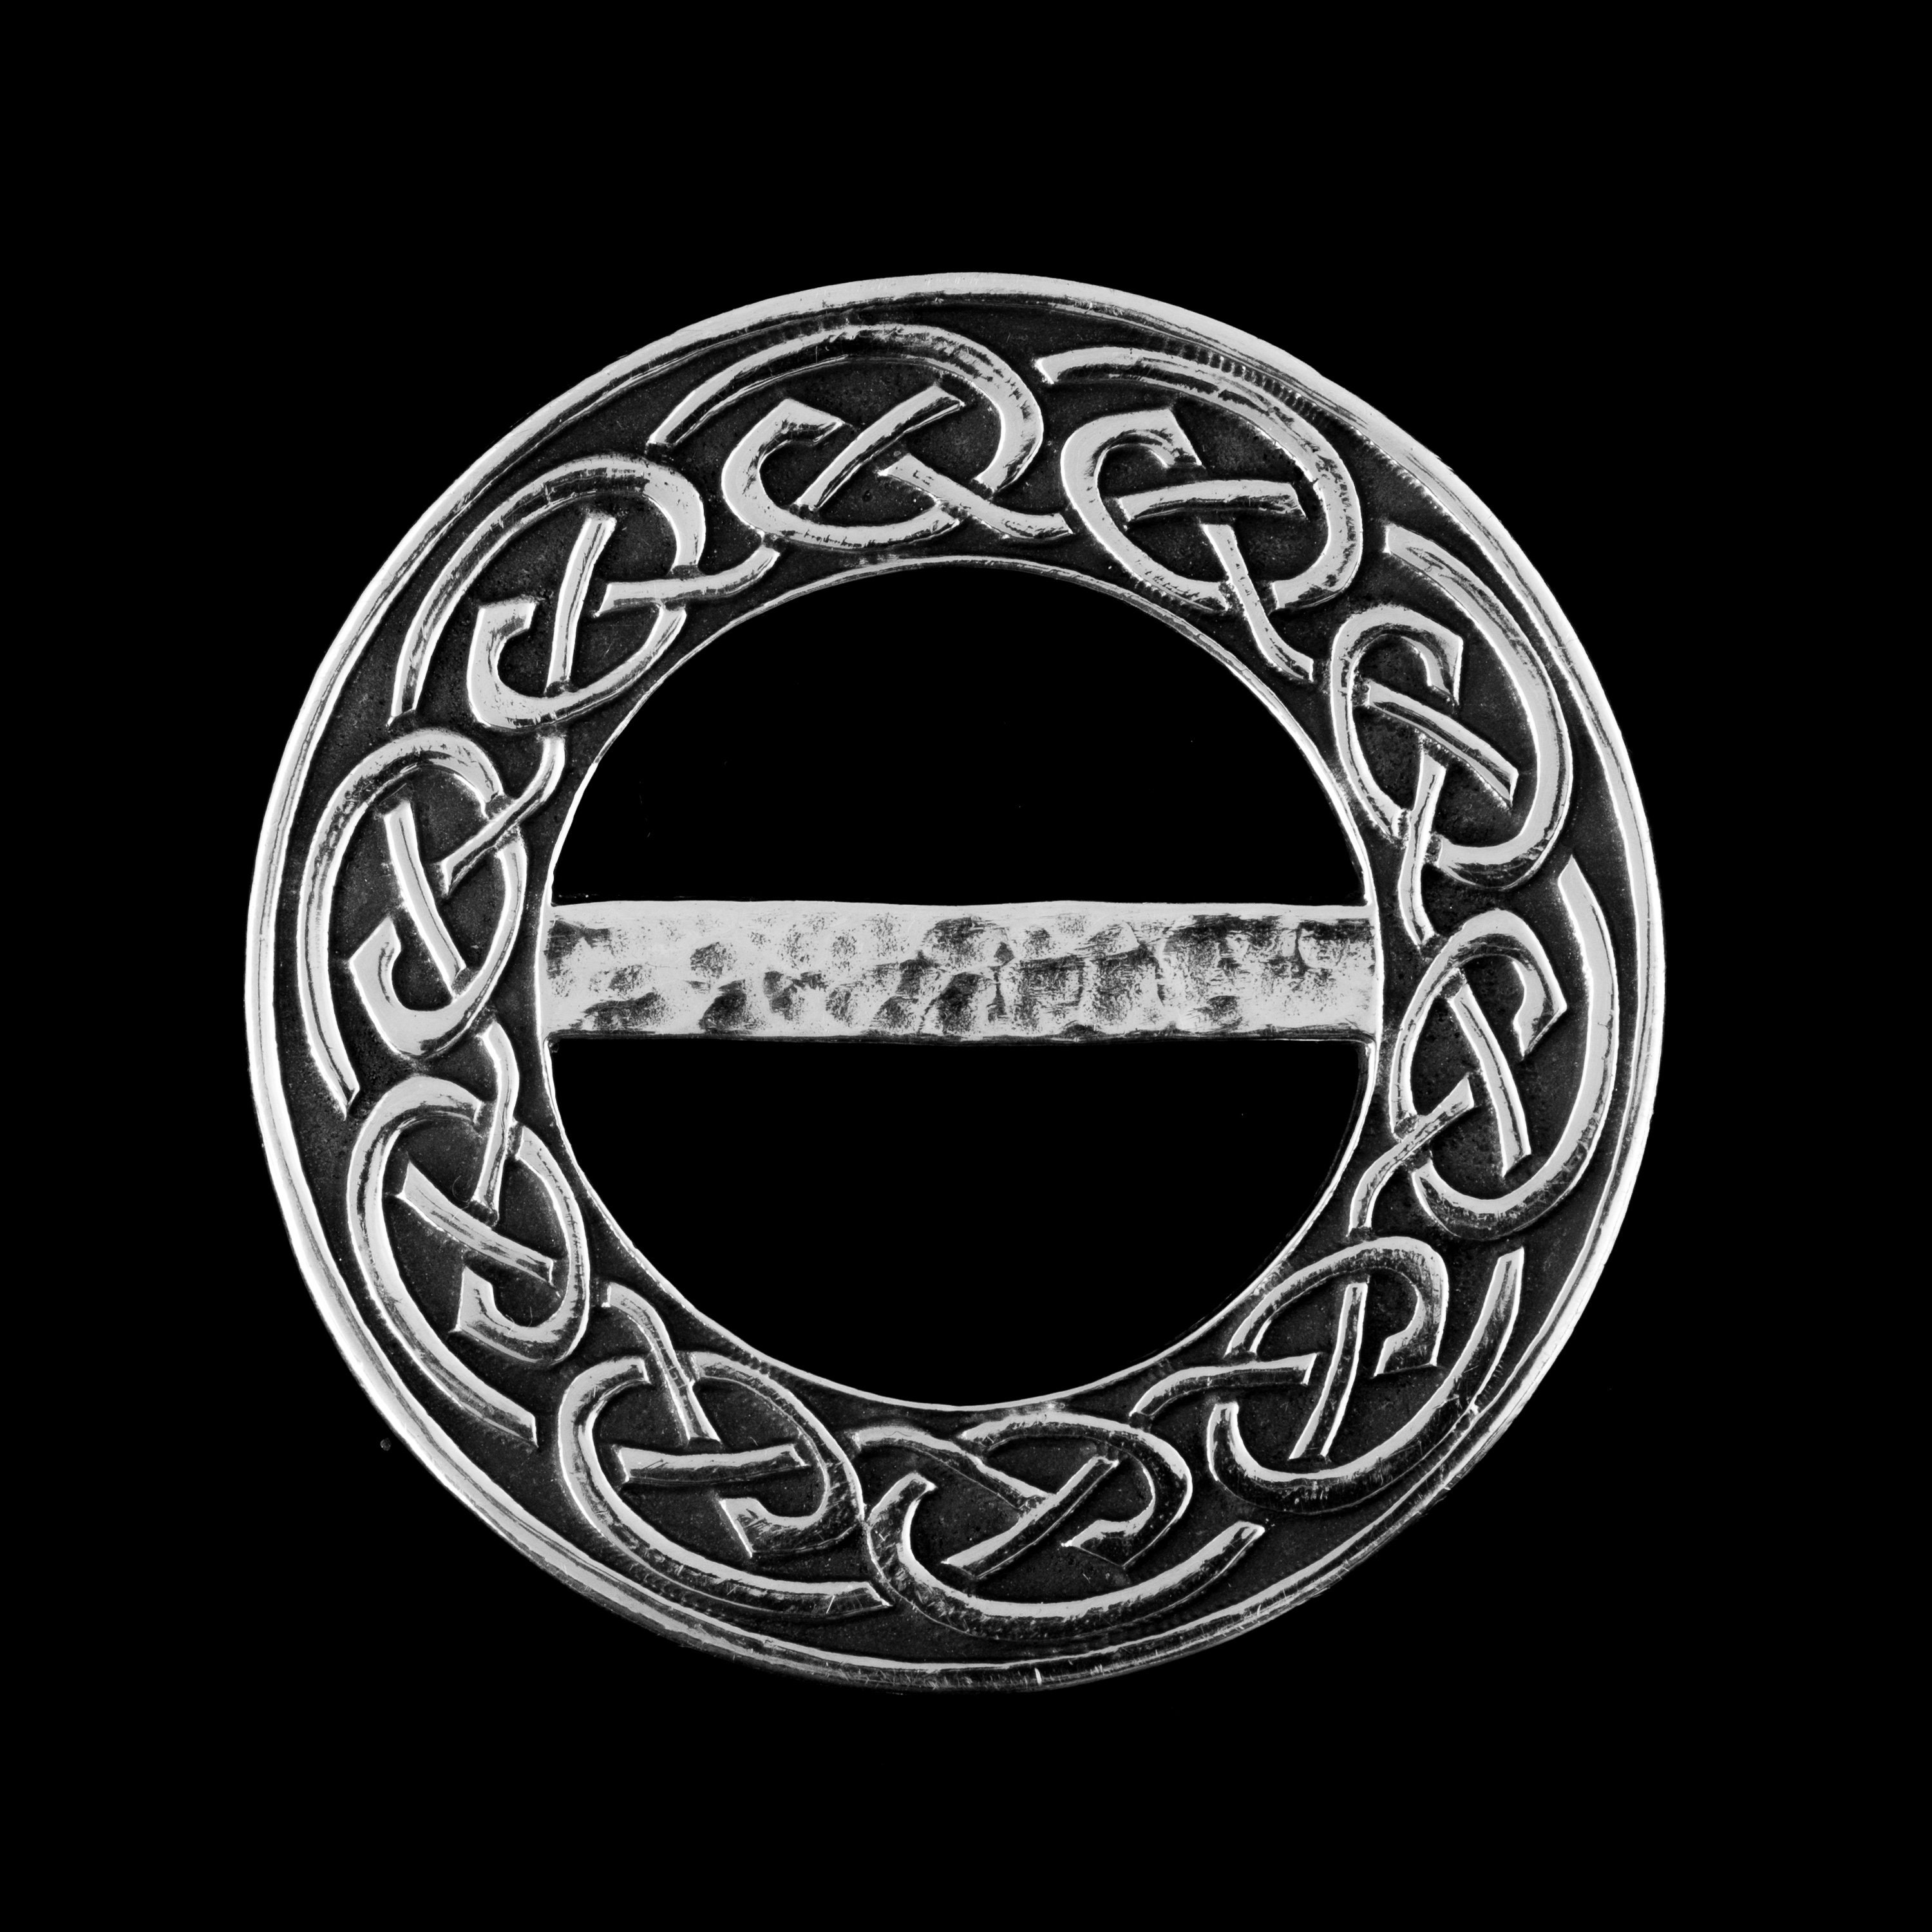 Mullingar Pewter Scarf Ring with Celtic bird motif Light Scarves.